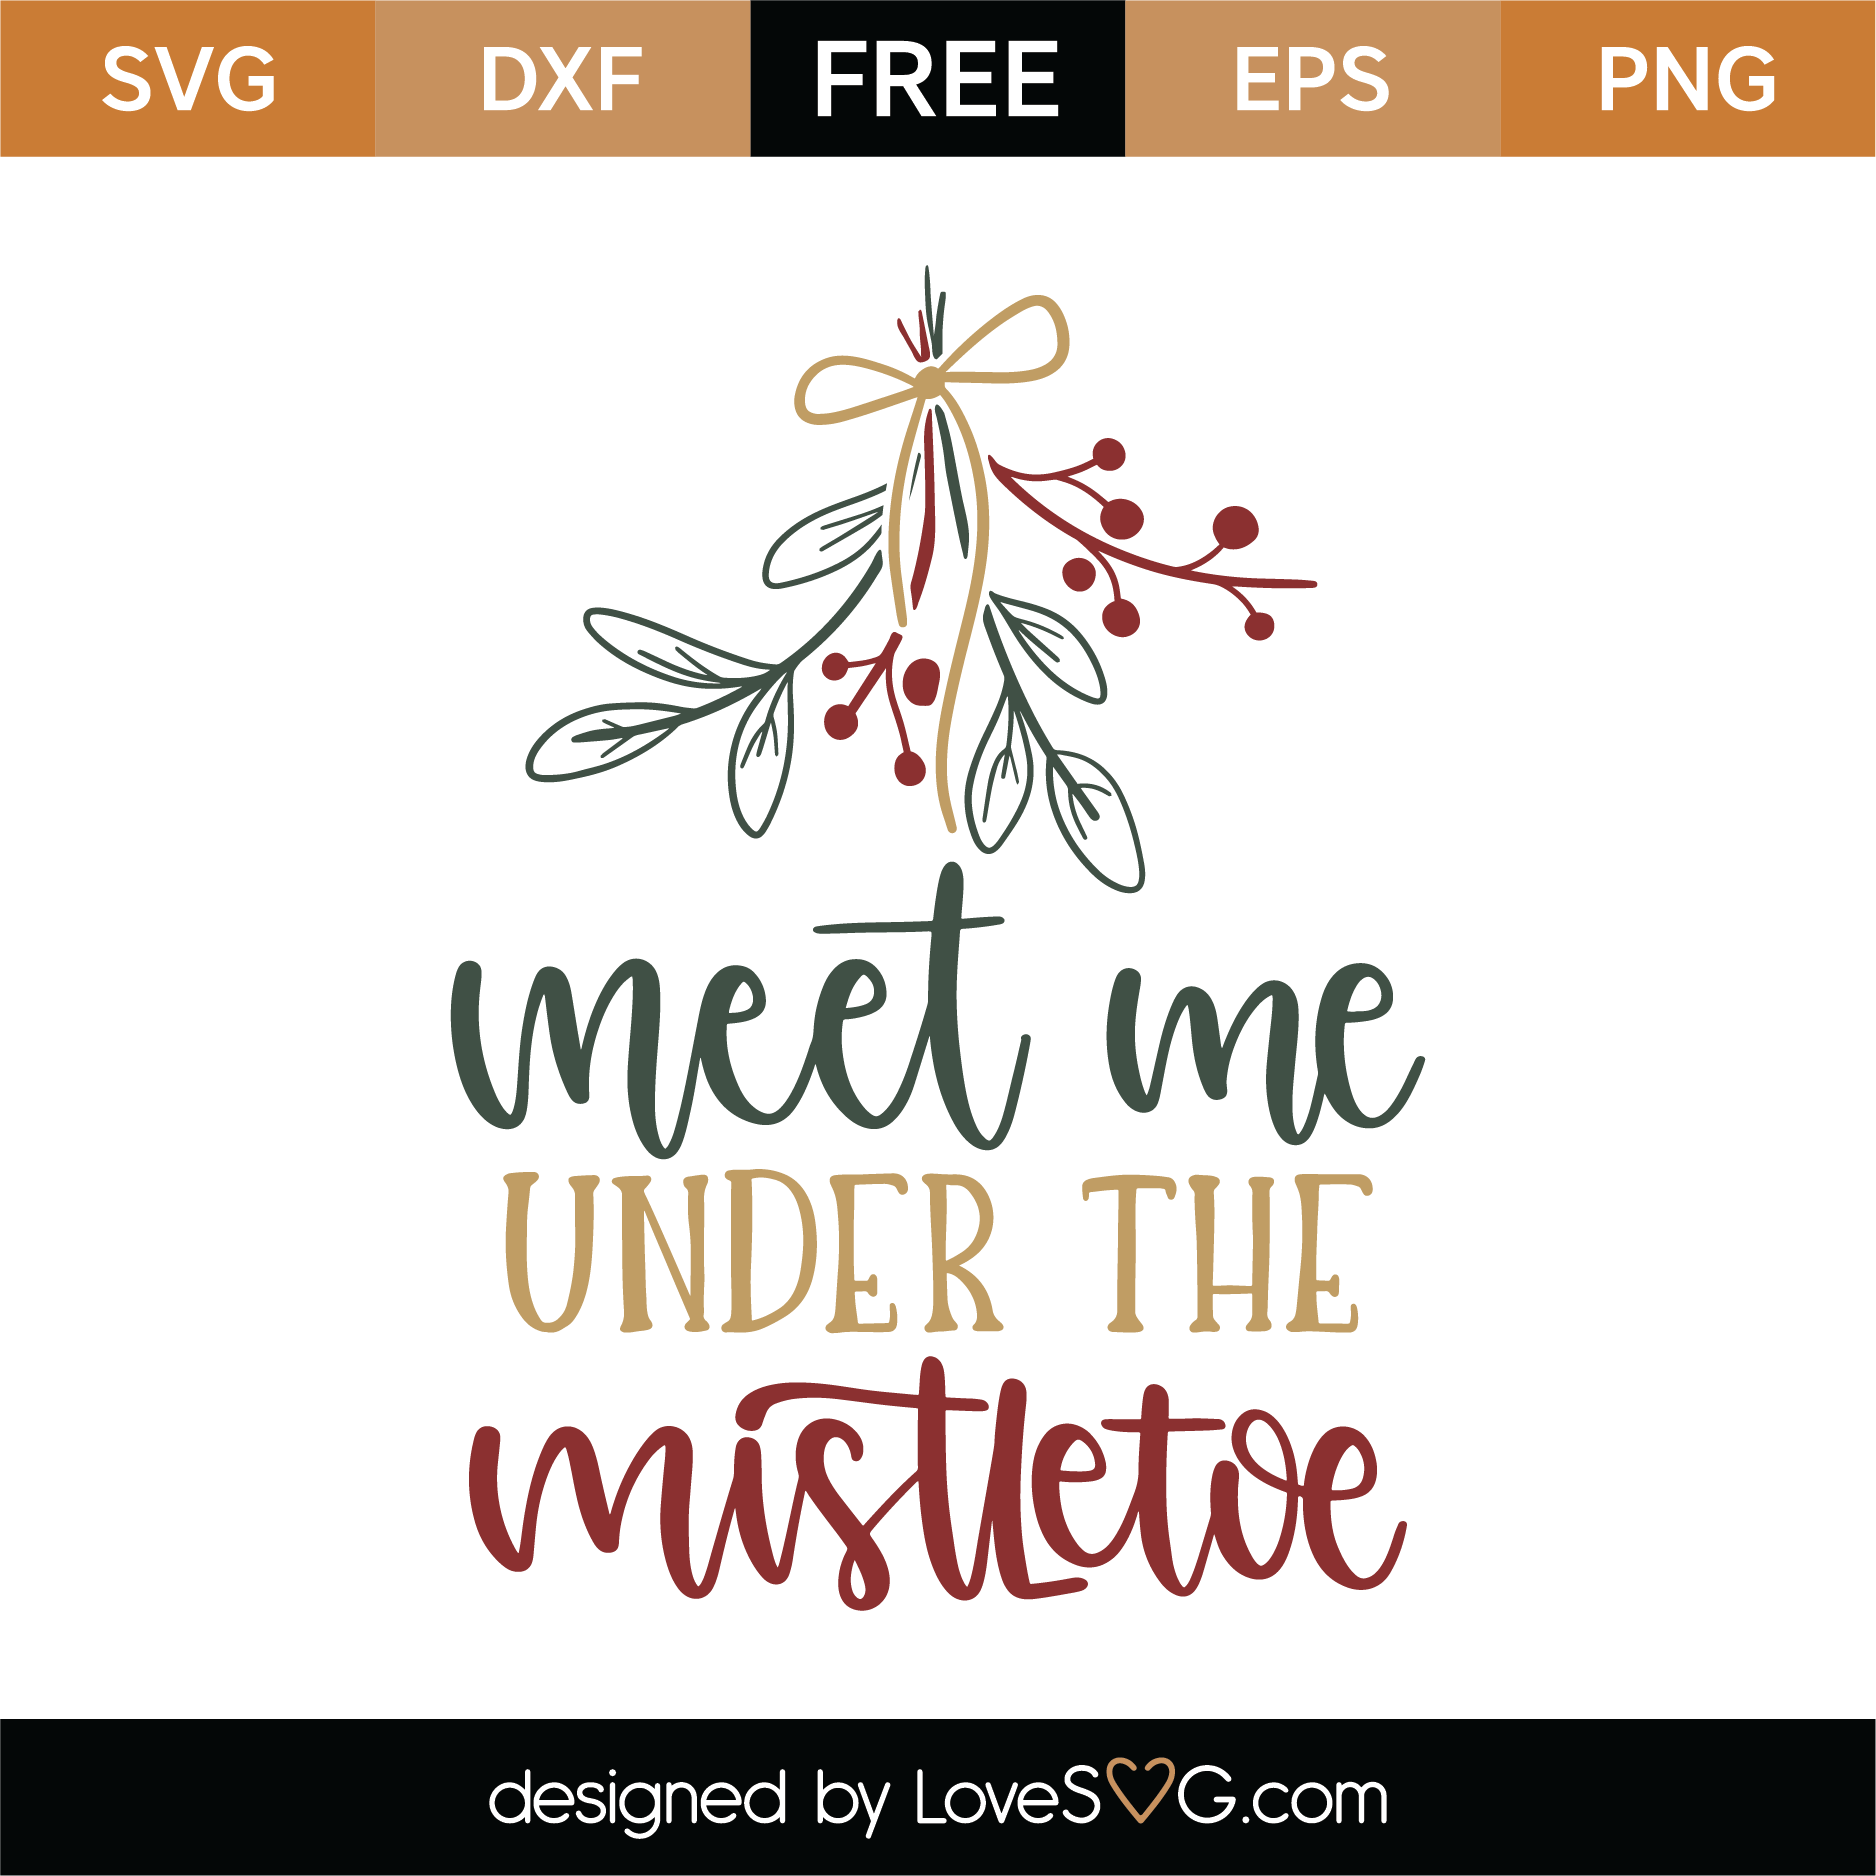 Download Free Meet Me Under The Mistletoe SVG Cut File | Lovesvg.com